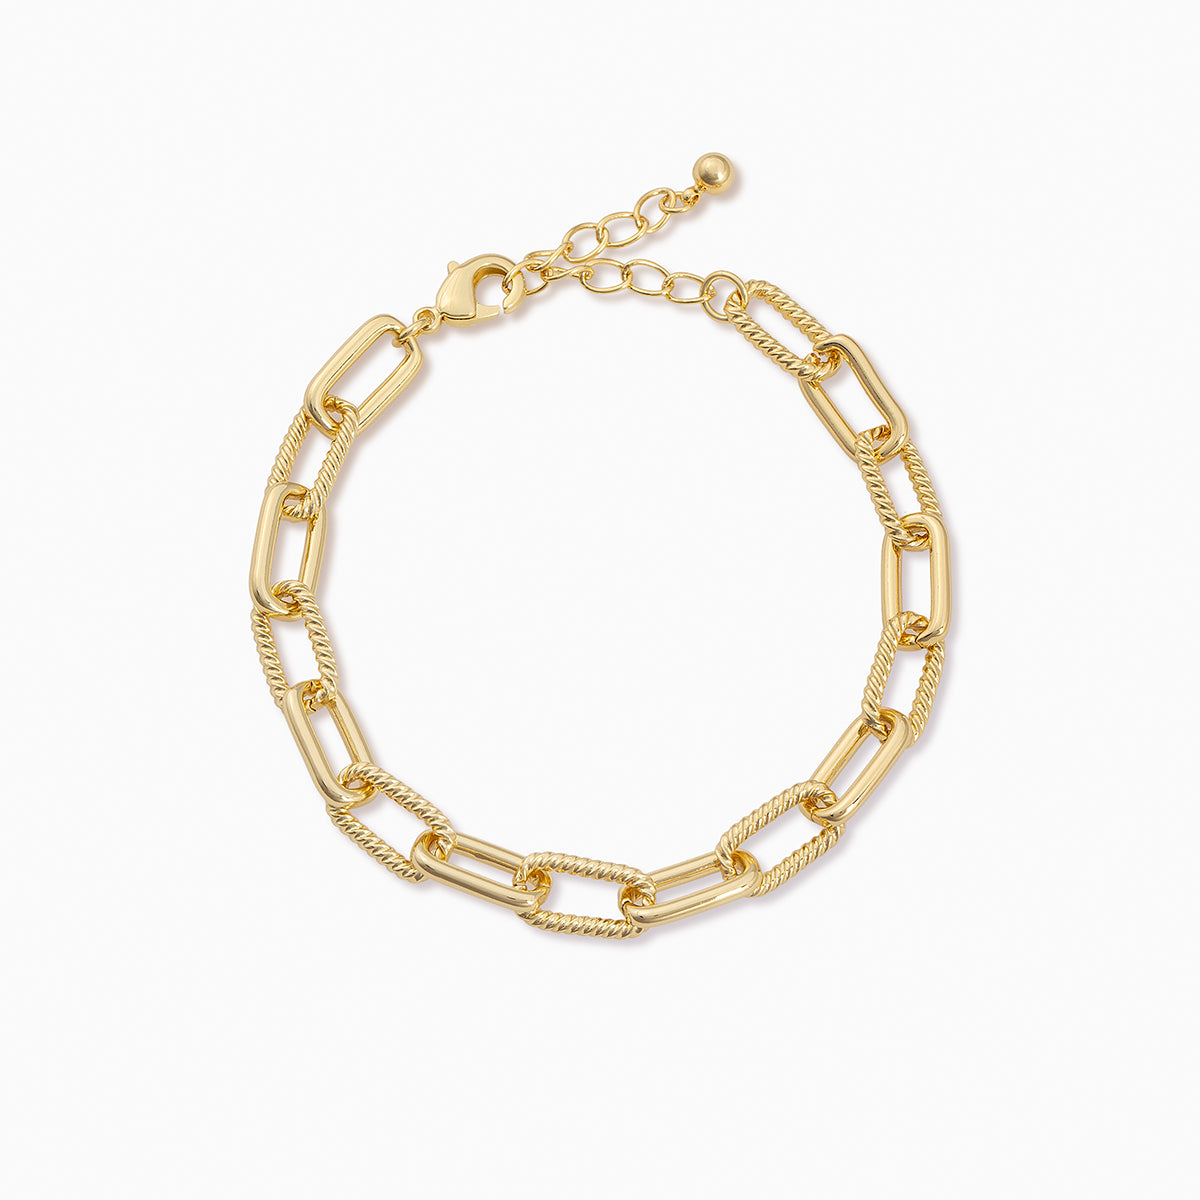 Linked Chain Bracelet | Gold | Product Image | Uncommon James